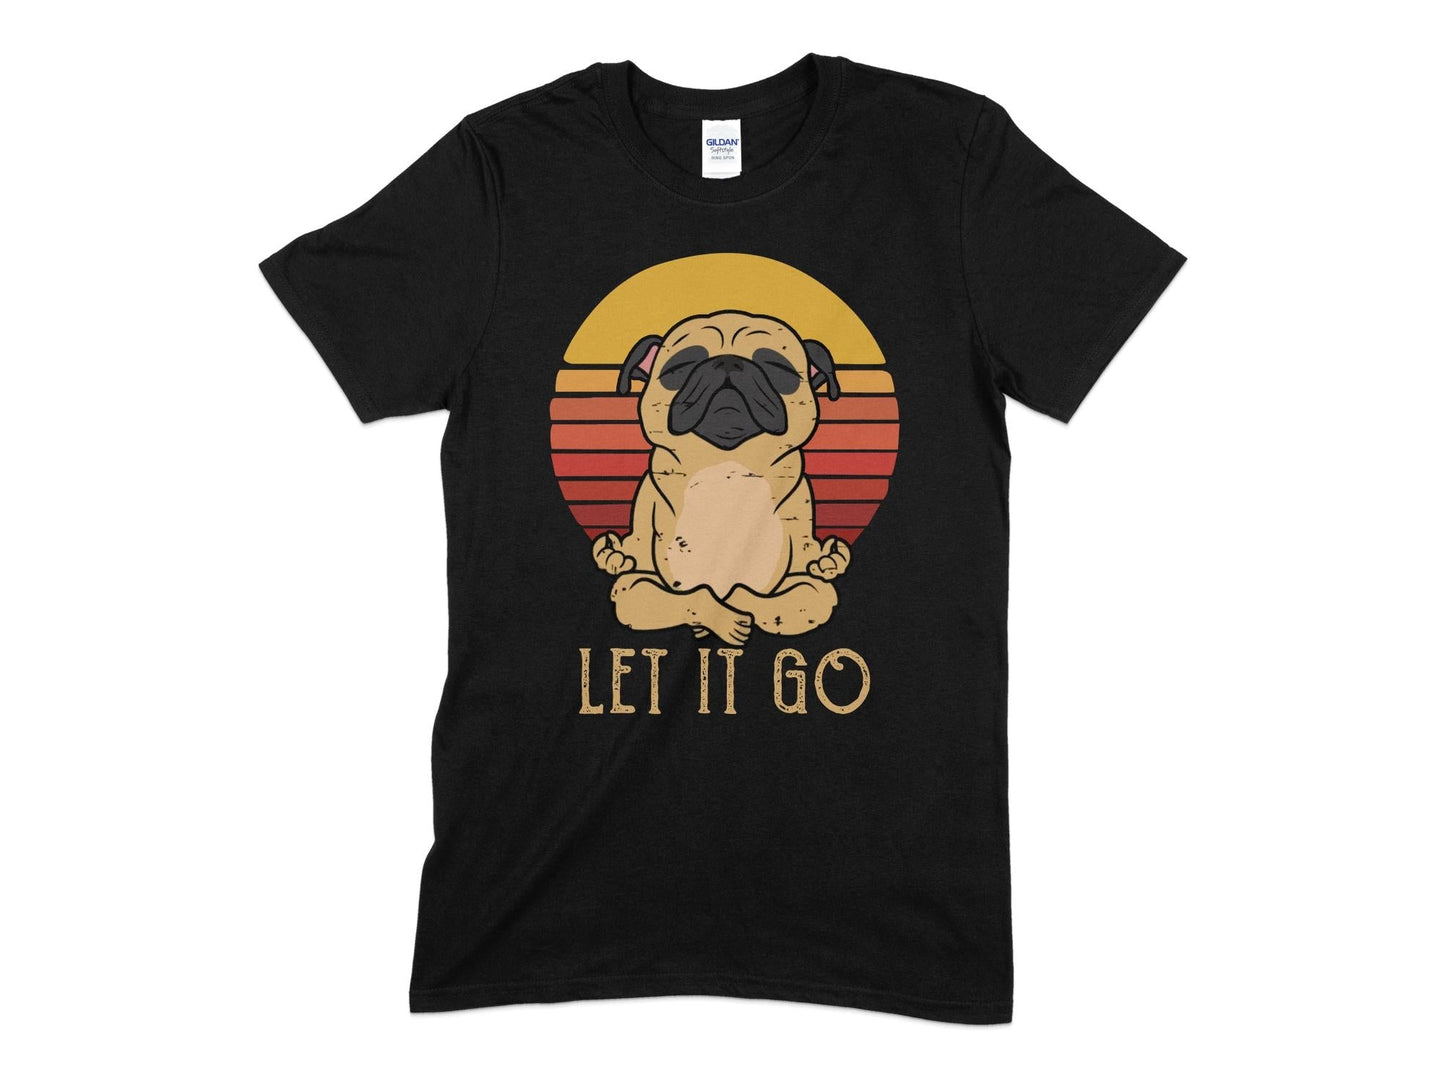 yoga namaste dog t-shirt - Premium t-shirt from MyDesigns - Just $21.95! Shop now at Lees Krazy Teez